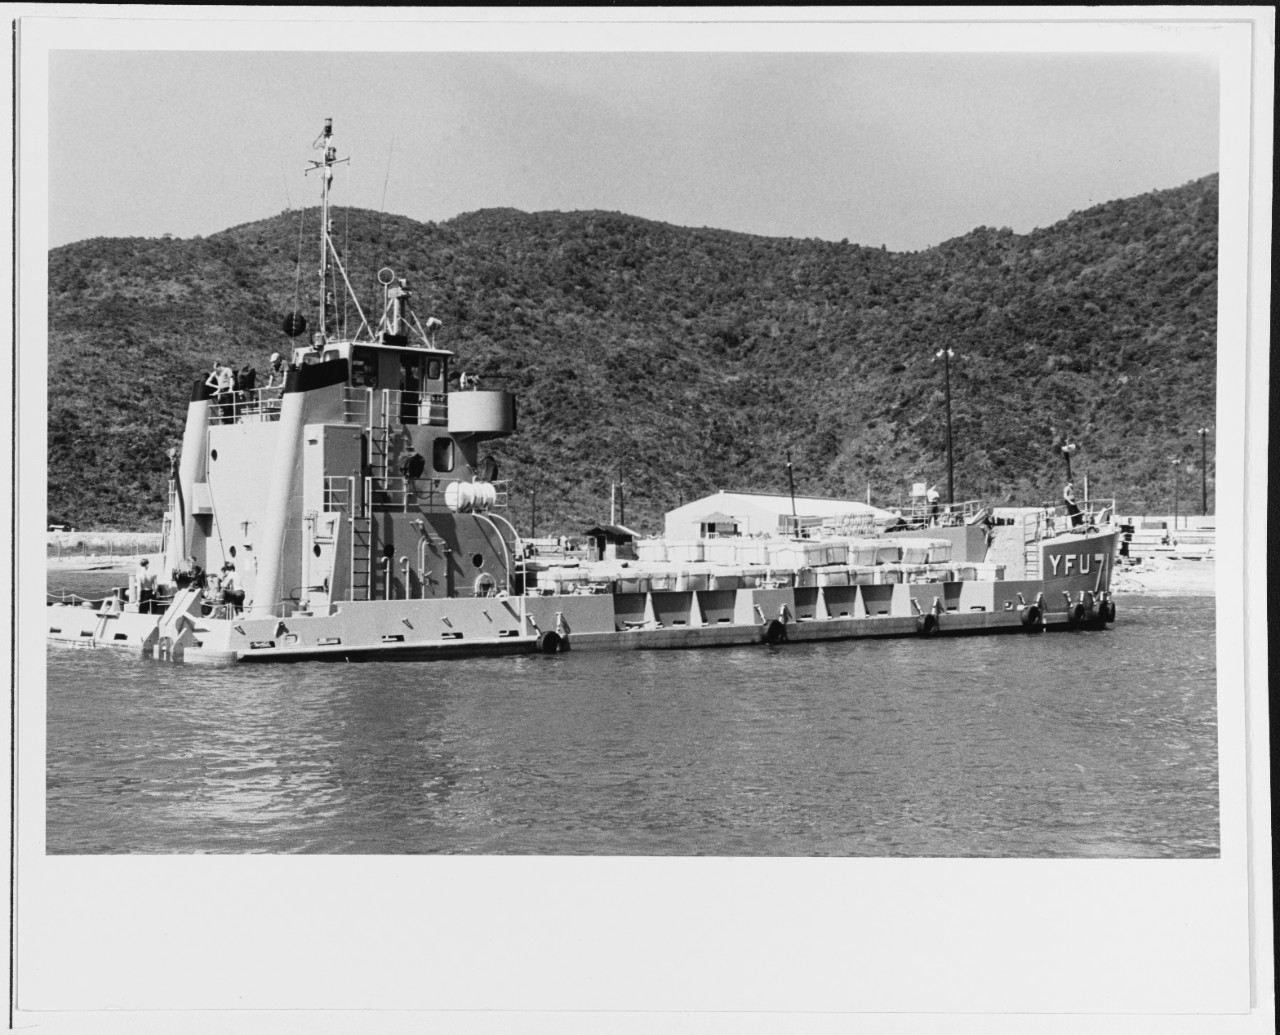 USS SKILAK (YFU-71), 1967